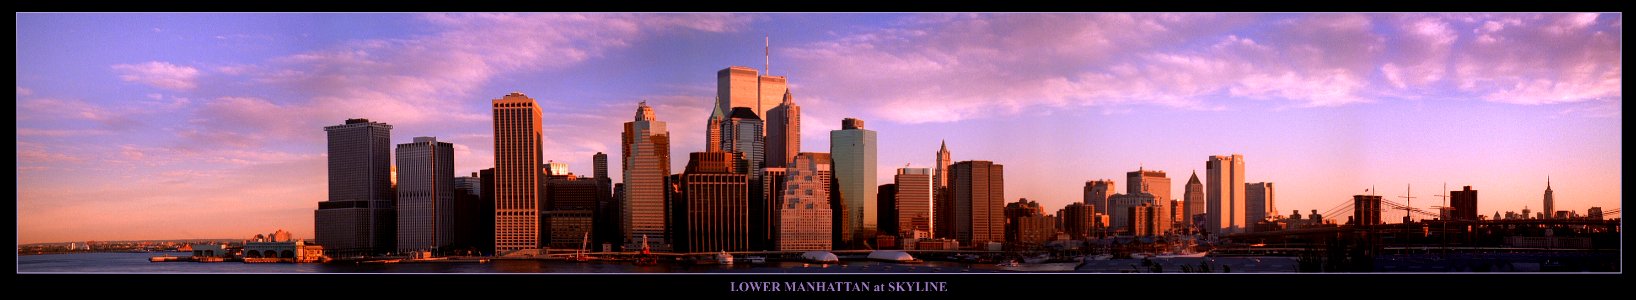 New York City. Lower Manhattan at skyline! photo